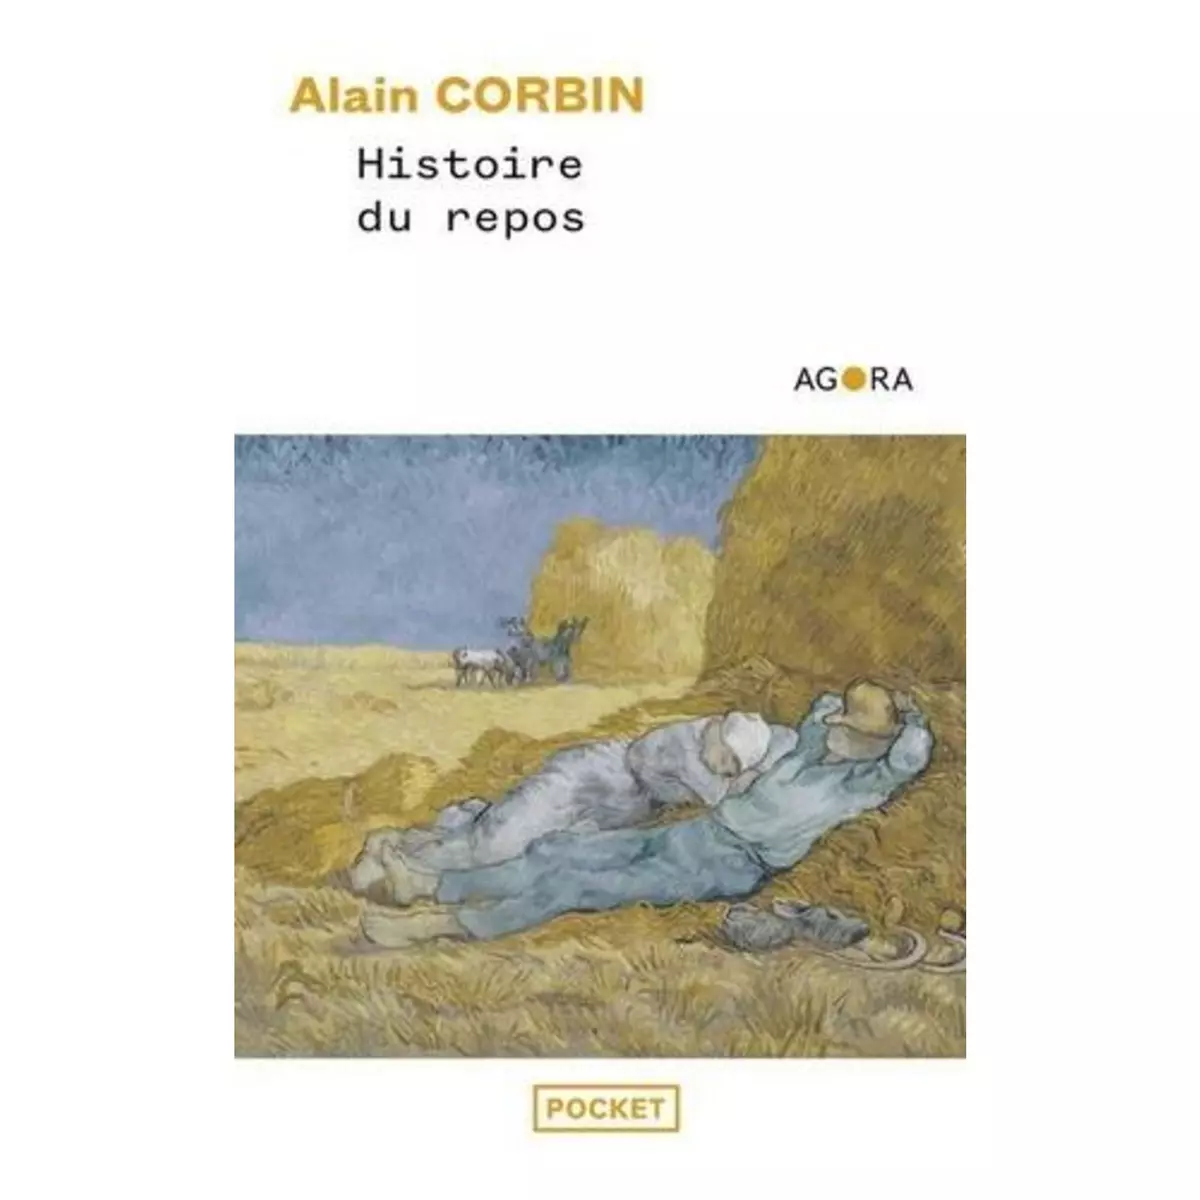  HISTOIRE DU REPOS, Corbin Alain